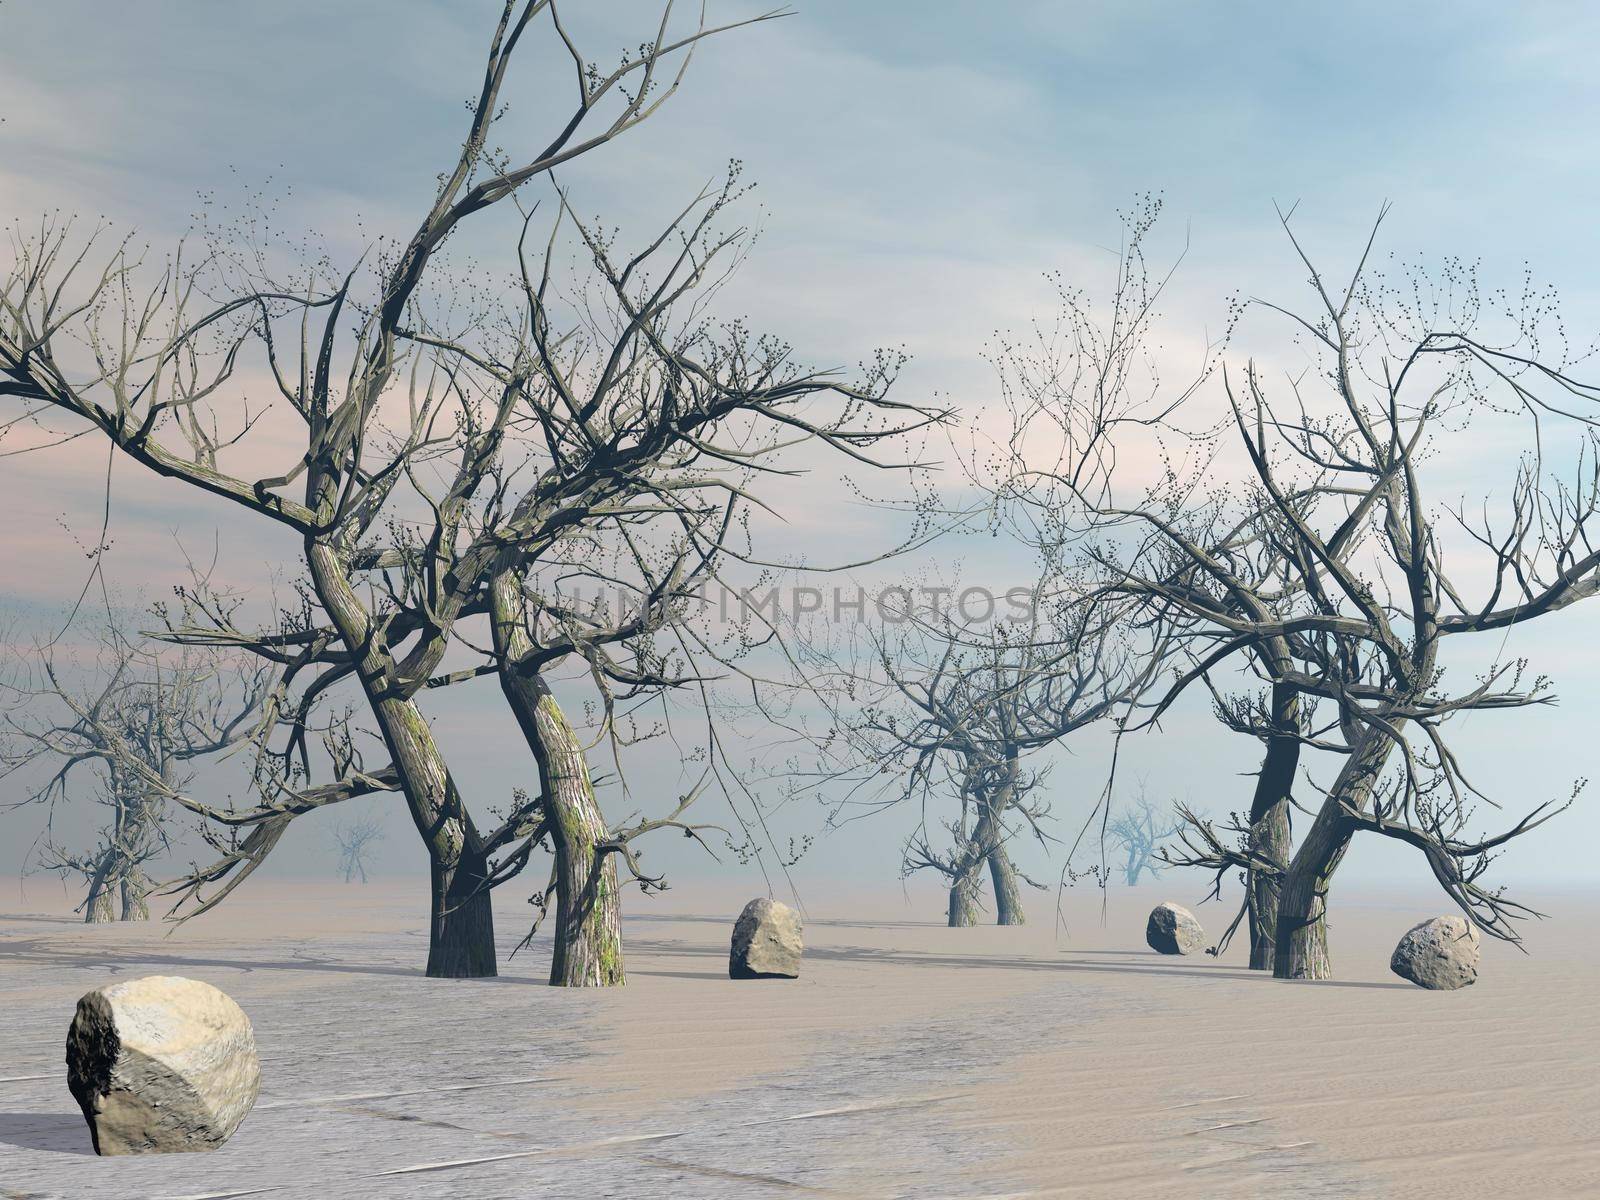 Dead trees in the desert - 3D render by Elenaphotos21